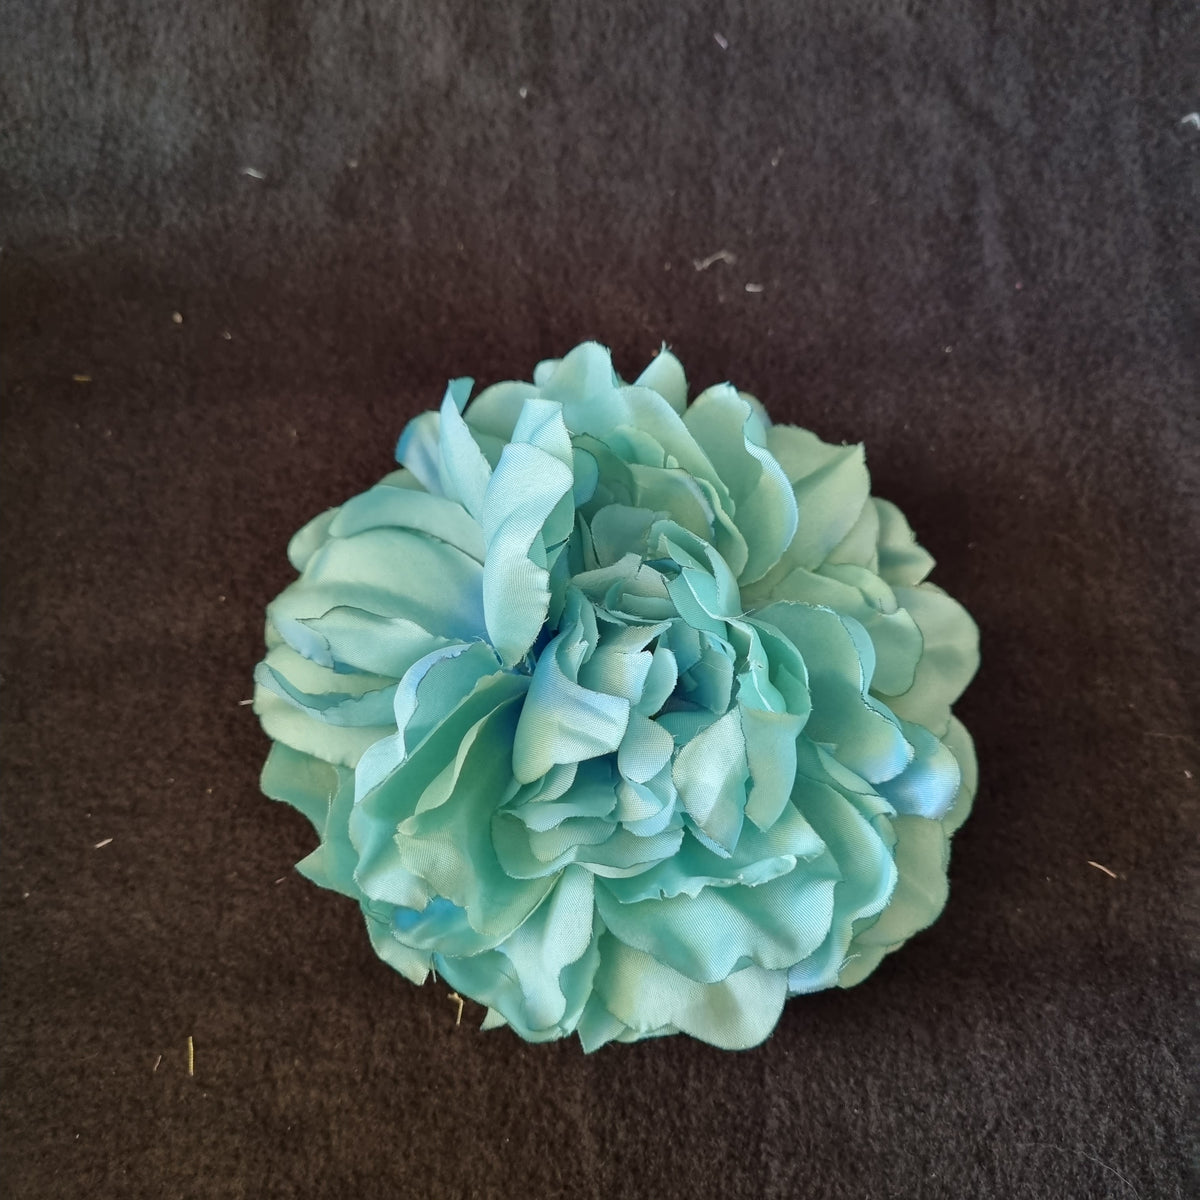 Stor grønblå pæon - Hårpynt med blomster og perler til bryllup, konfirmation og fest